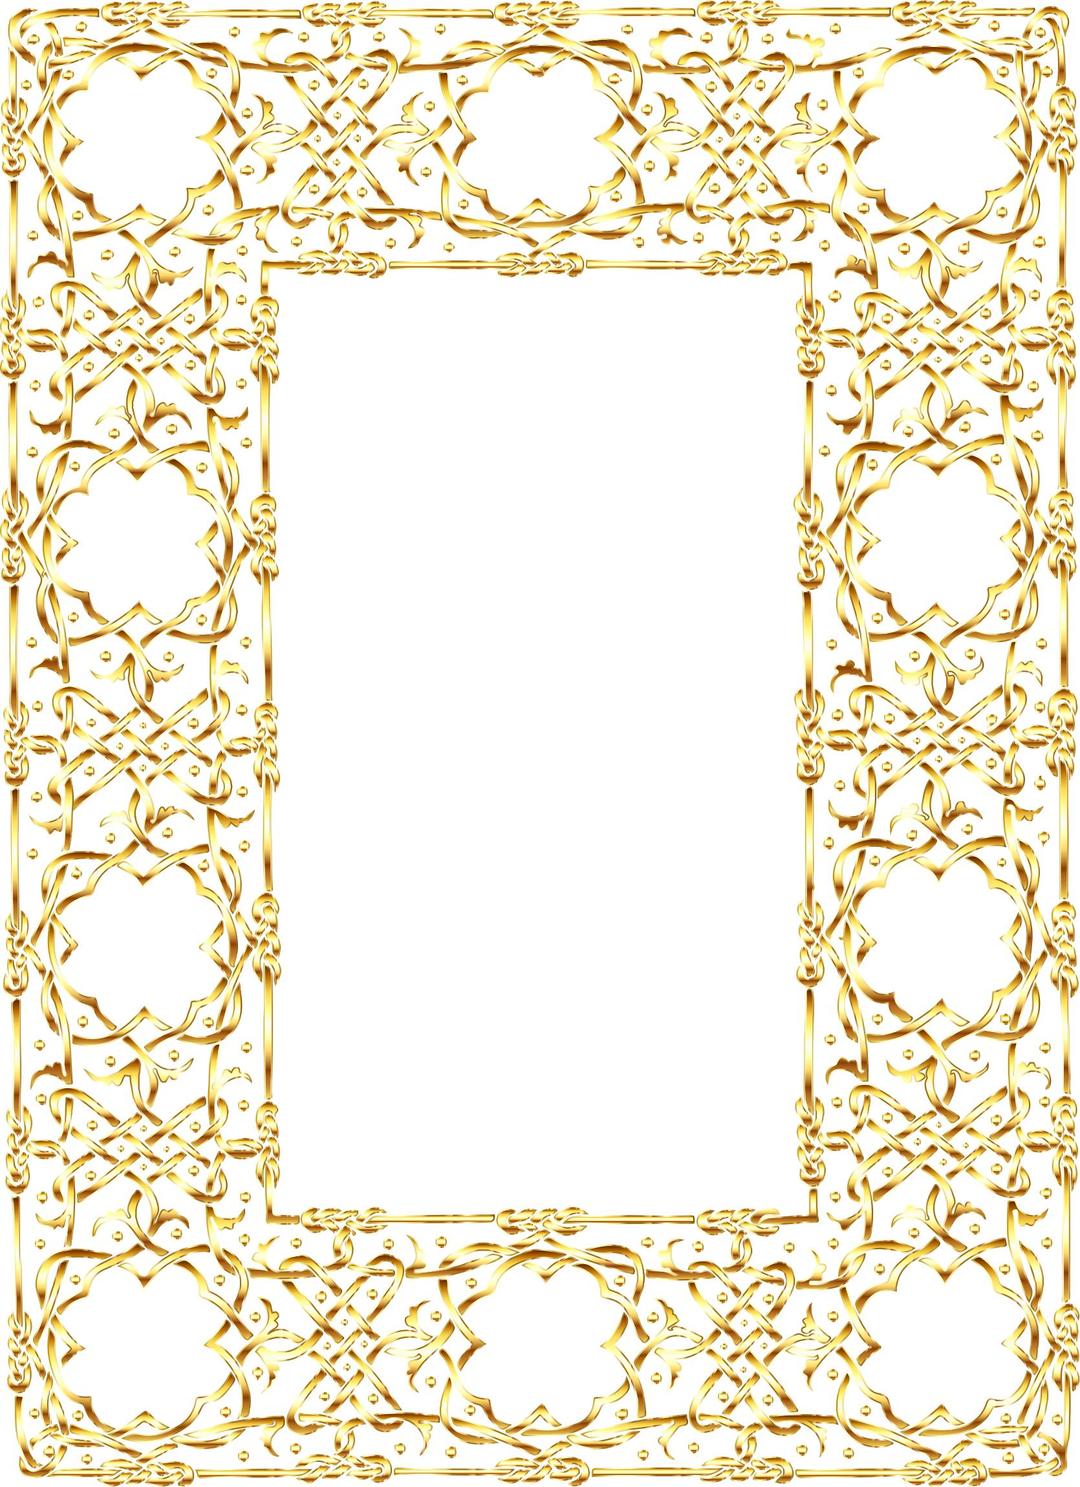 Gold Ornate Geometric Frame 2 No Background png transparent